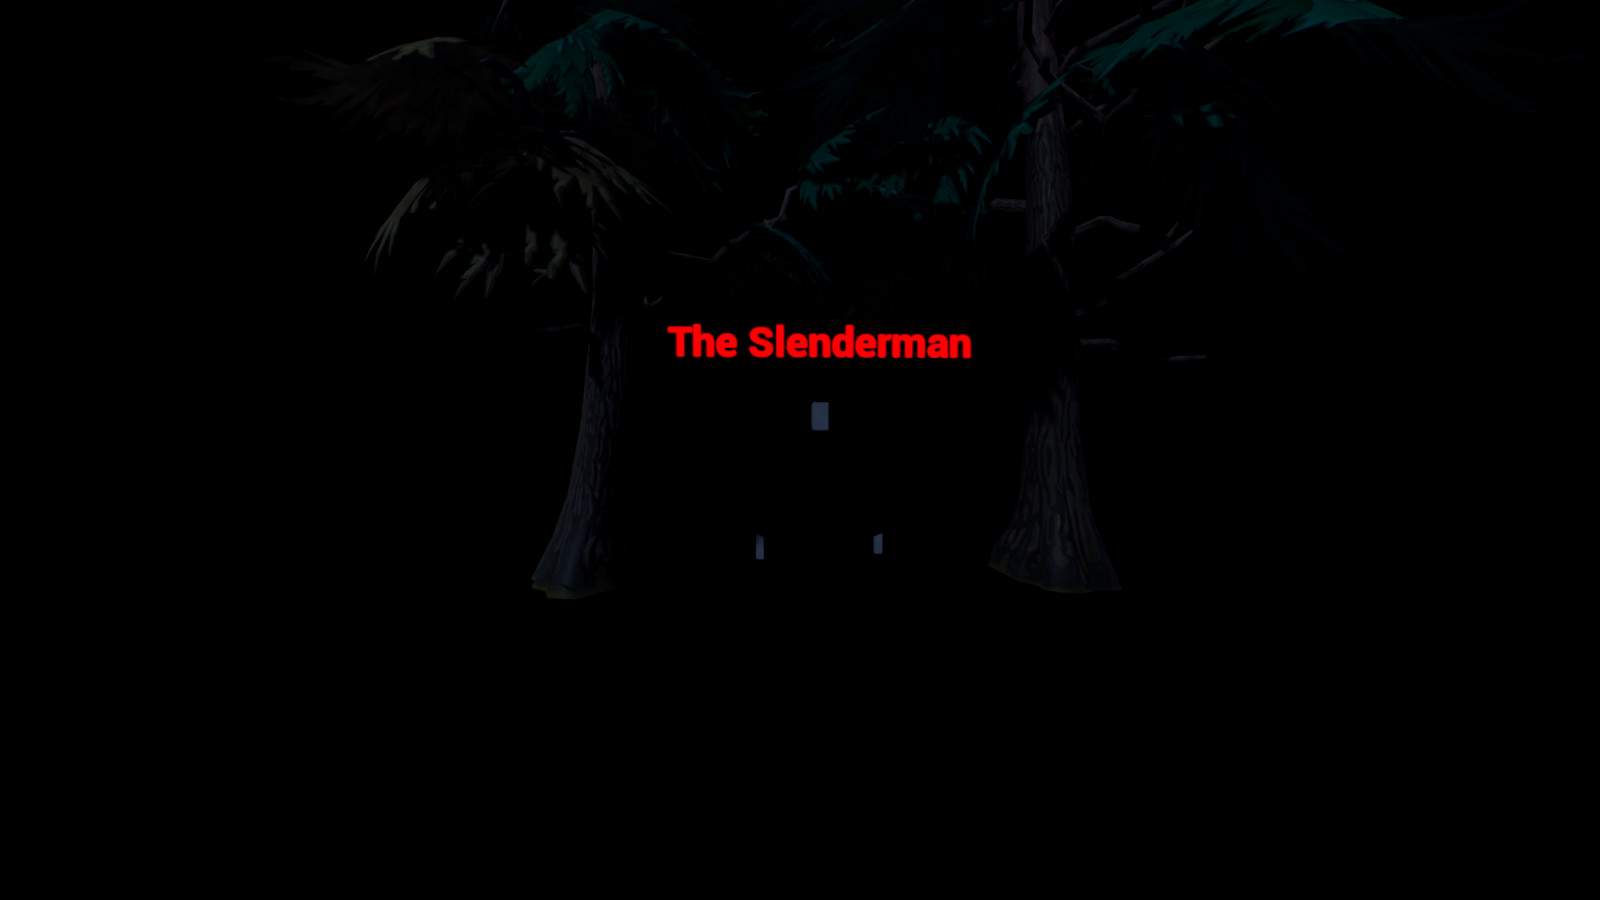 THE SLENDERMAN